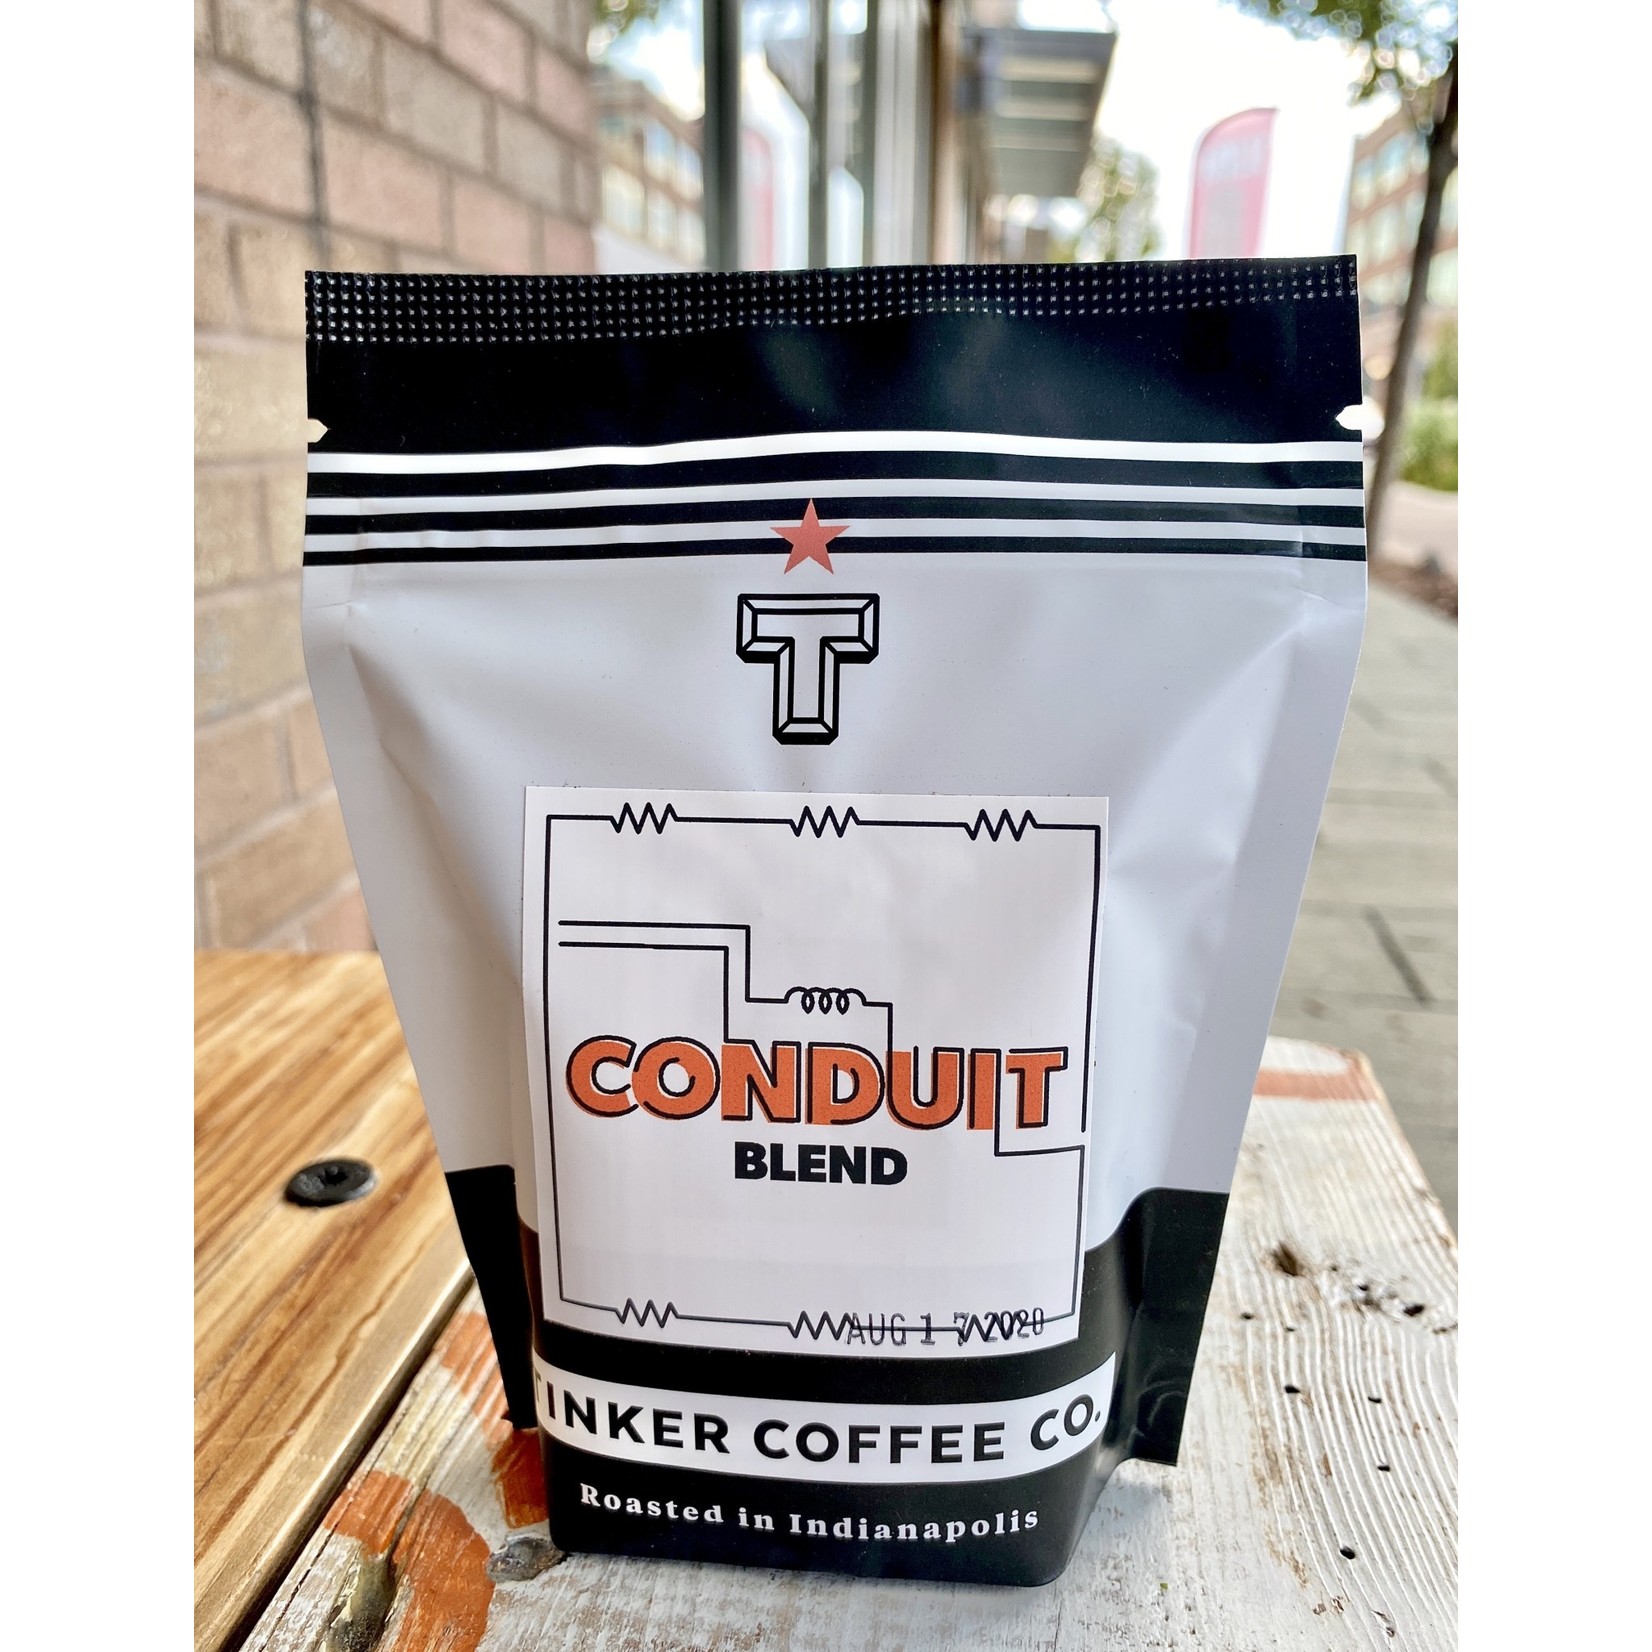 Tinker Coffee Co. Conduit Blend — Whole Bean Coffee 4oz. Bag